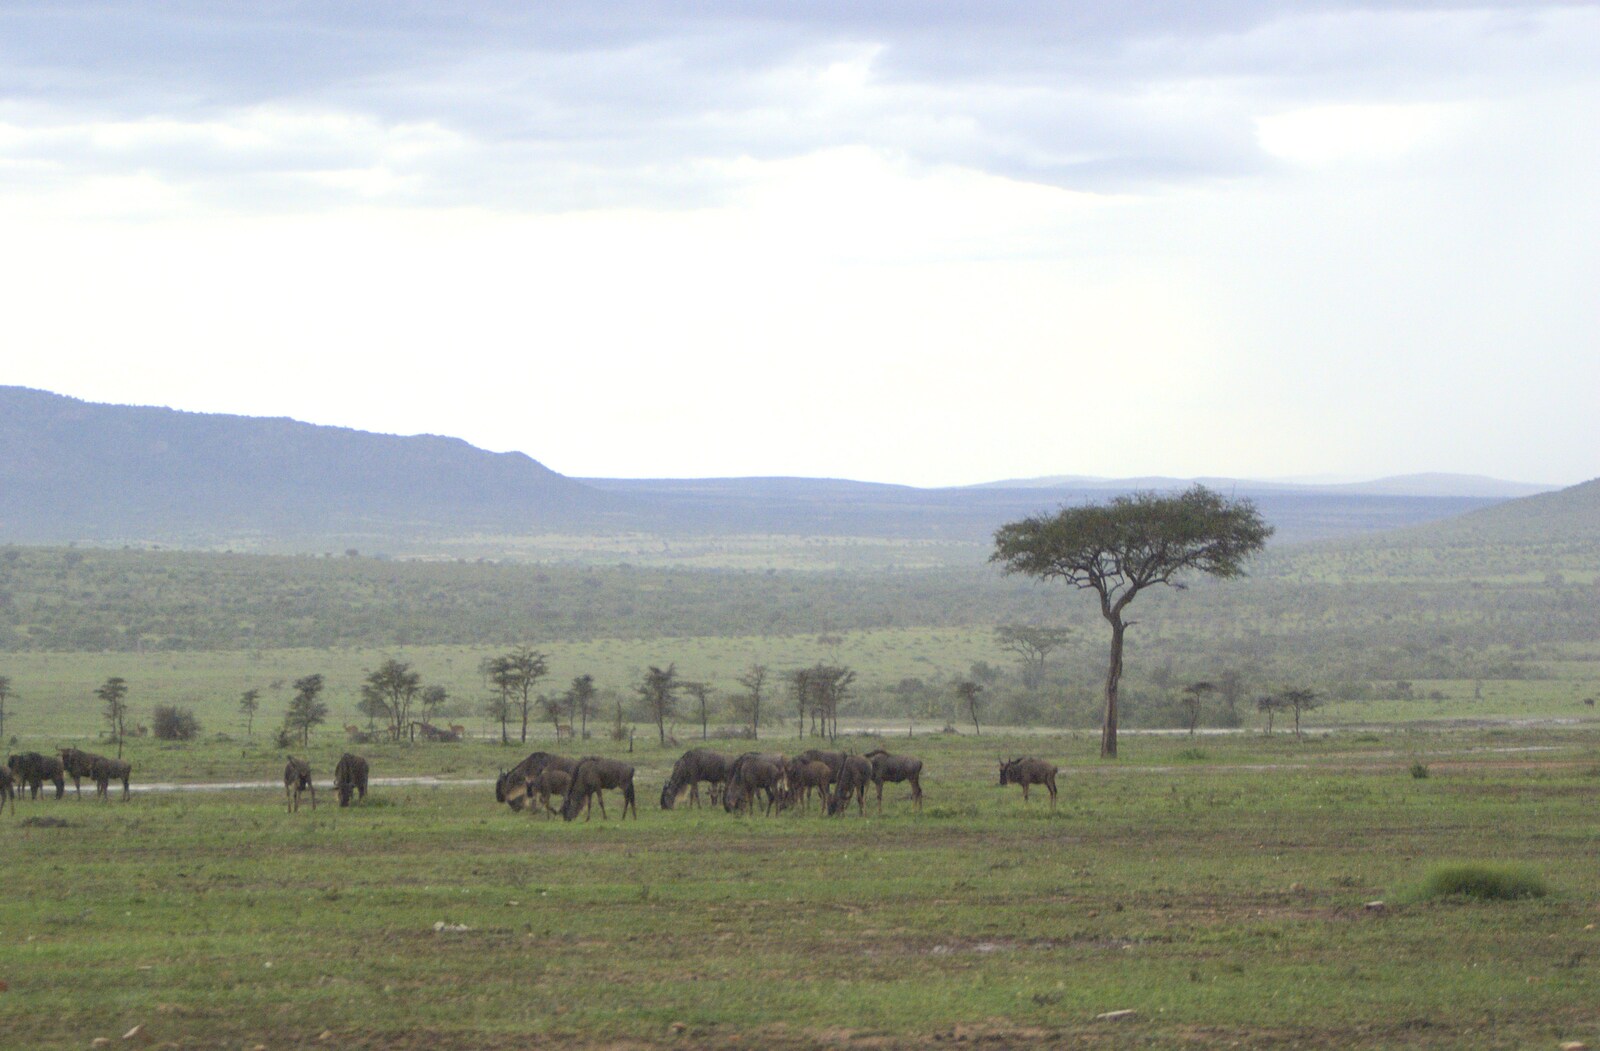 Maasai Mara Safari and a Maasai Village, Ololaimutia, Kenya - 5th November 2010: A herd of Wildebeest